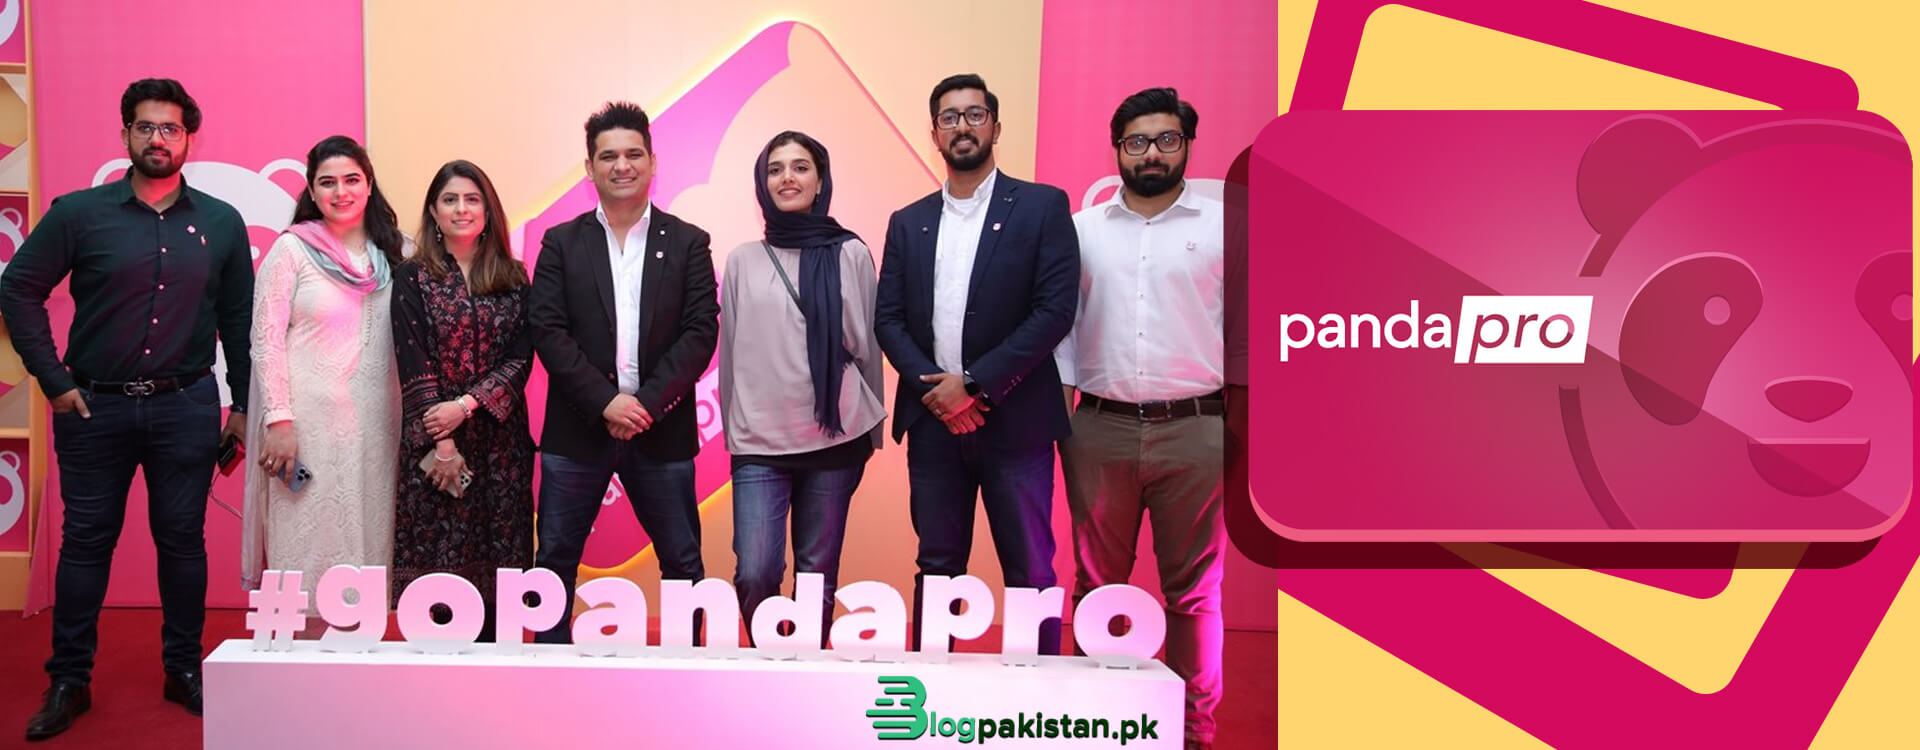 FoodPanda Launches PandaPro in Pakistan